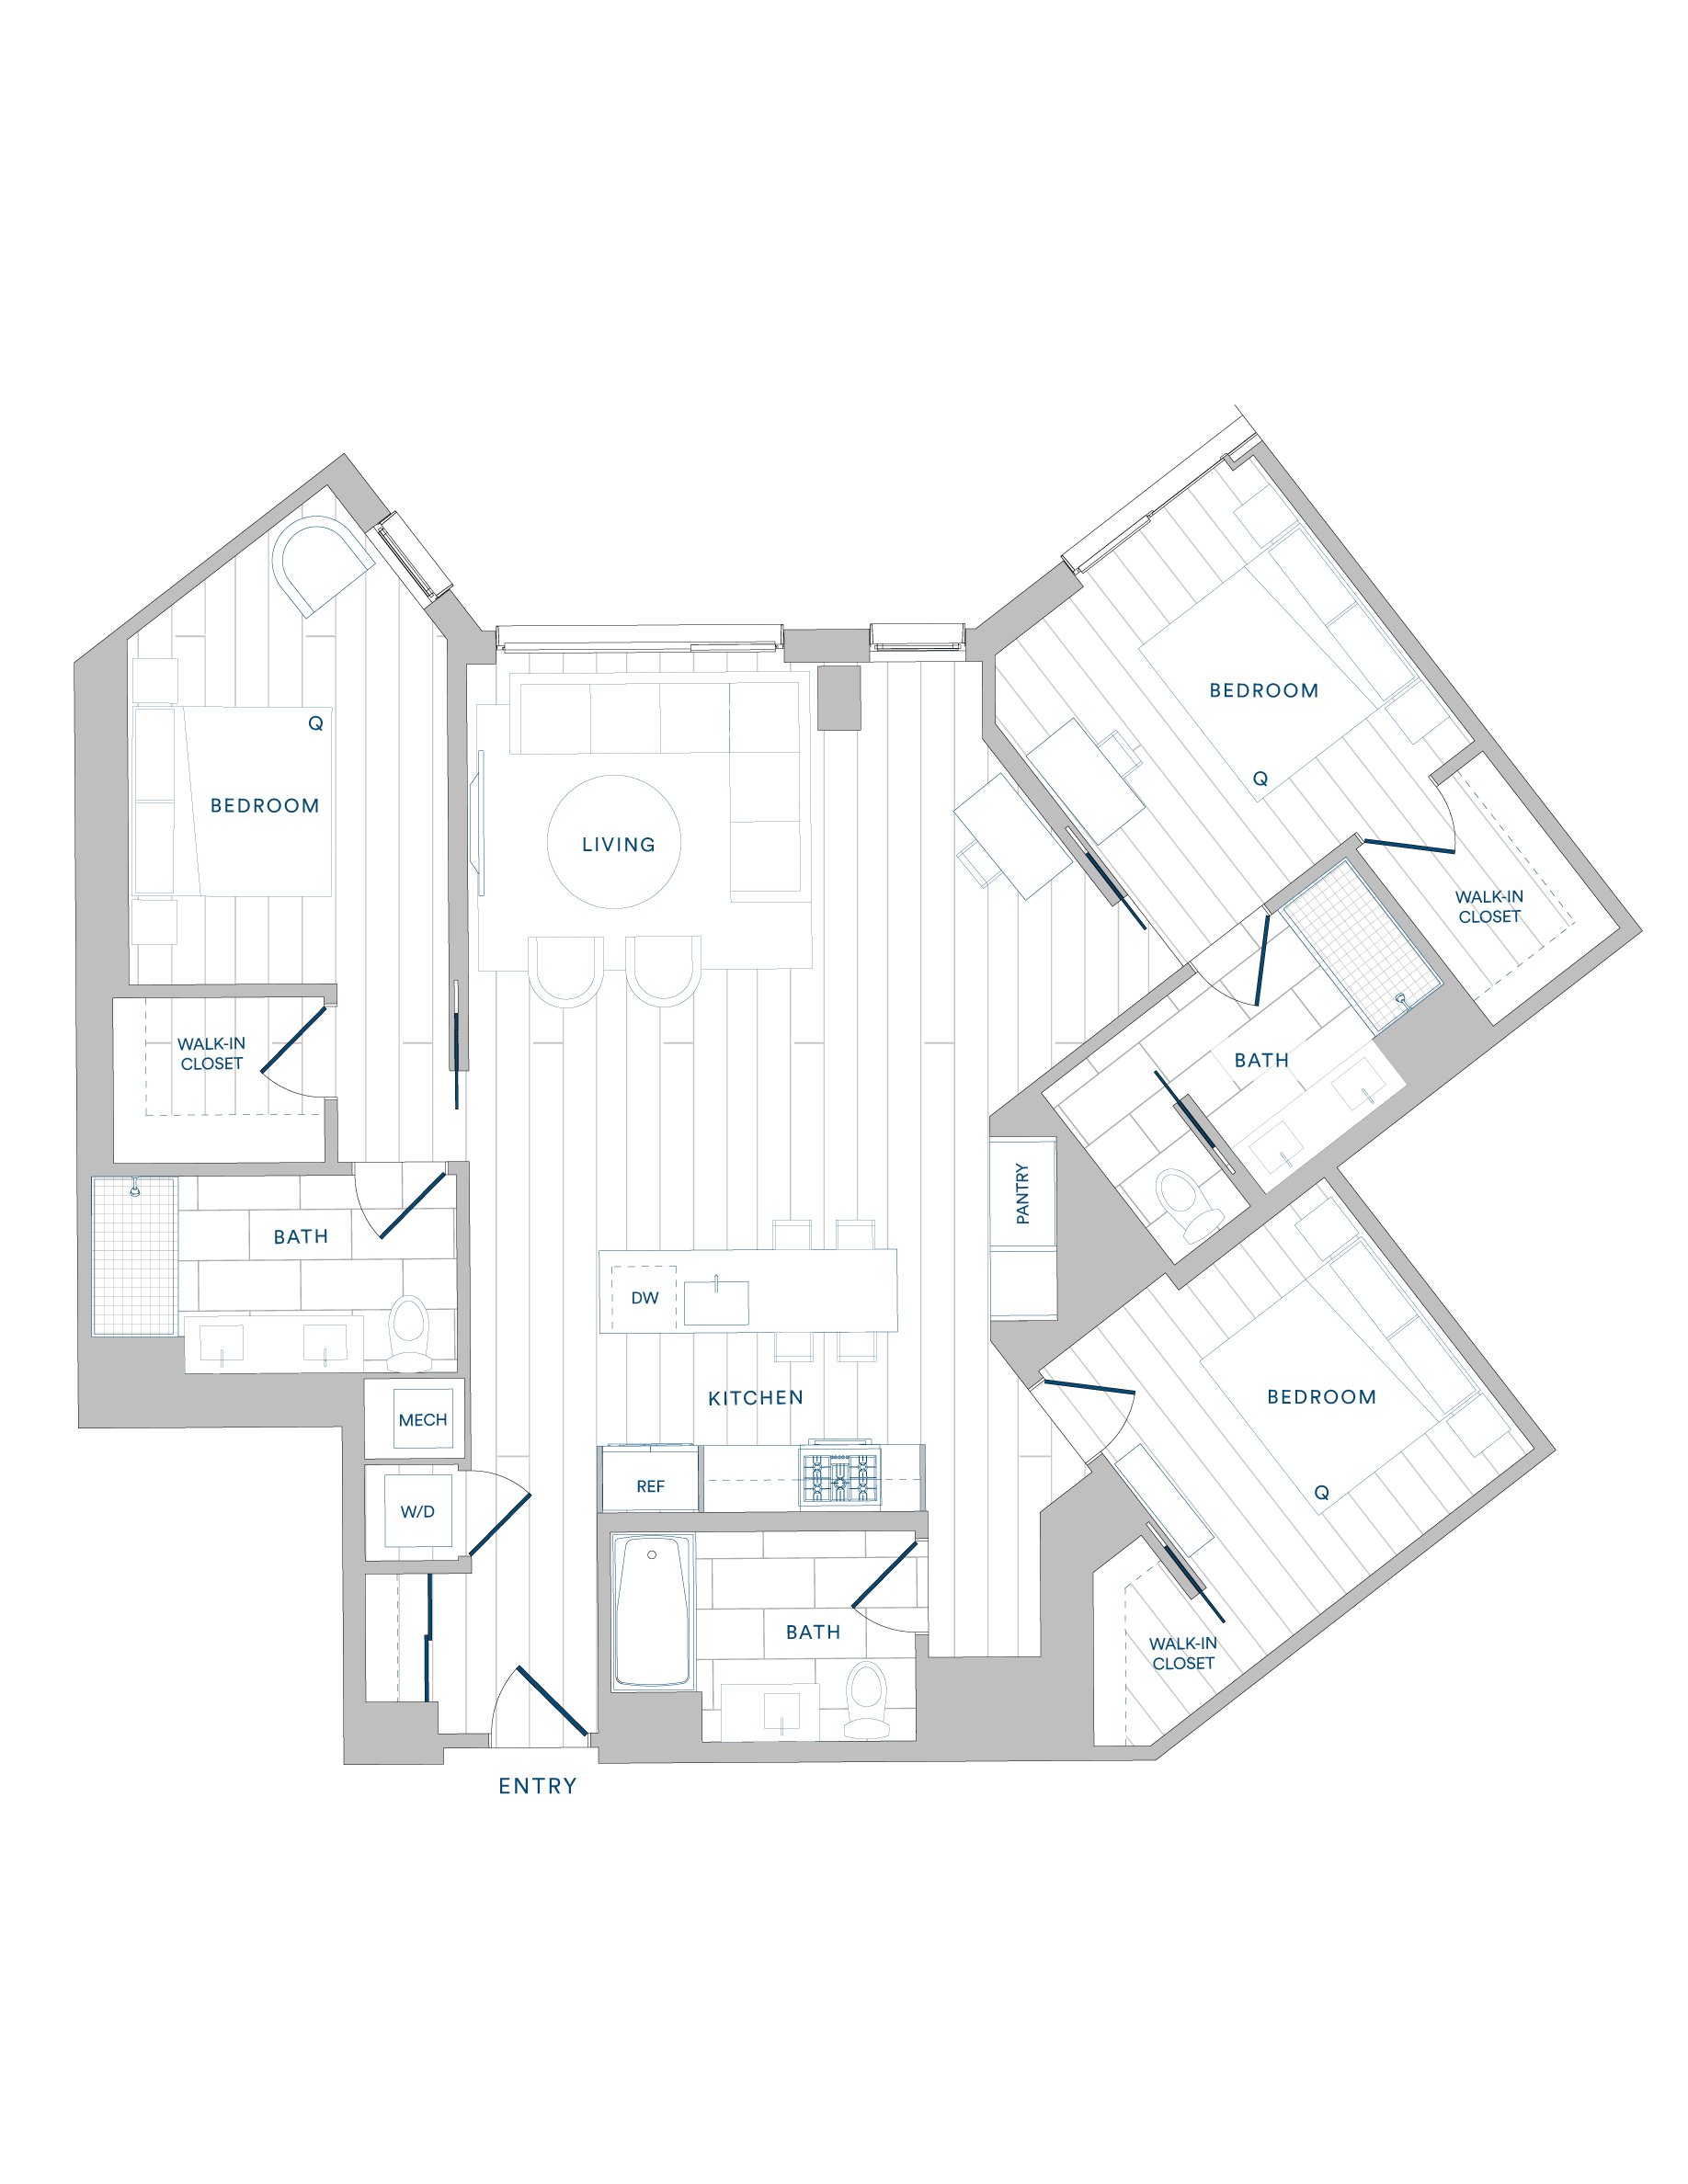 Floorplan for Apartment #1301, 3 bedroom unit at Margarite